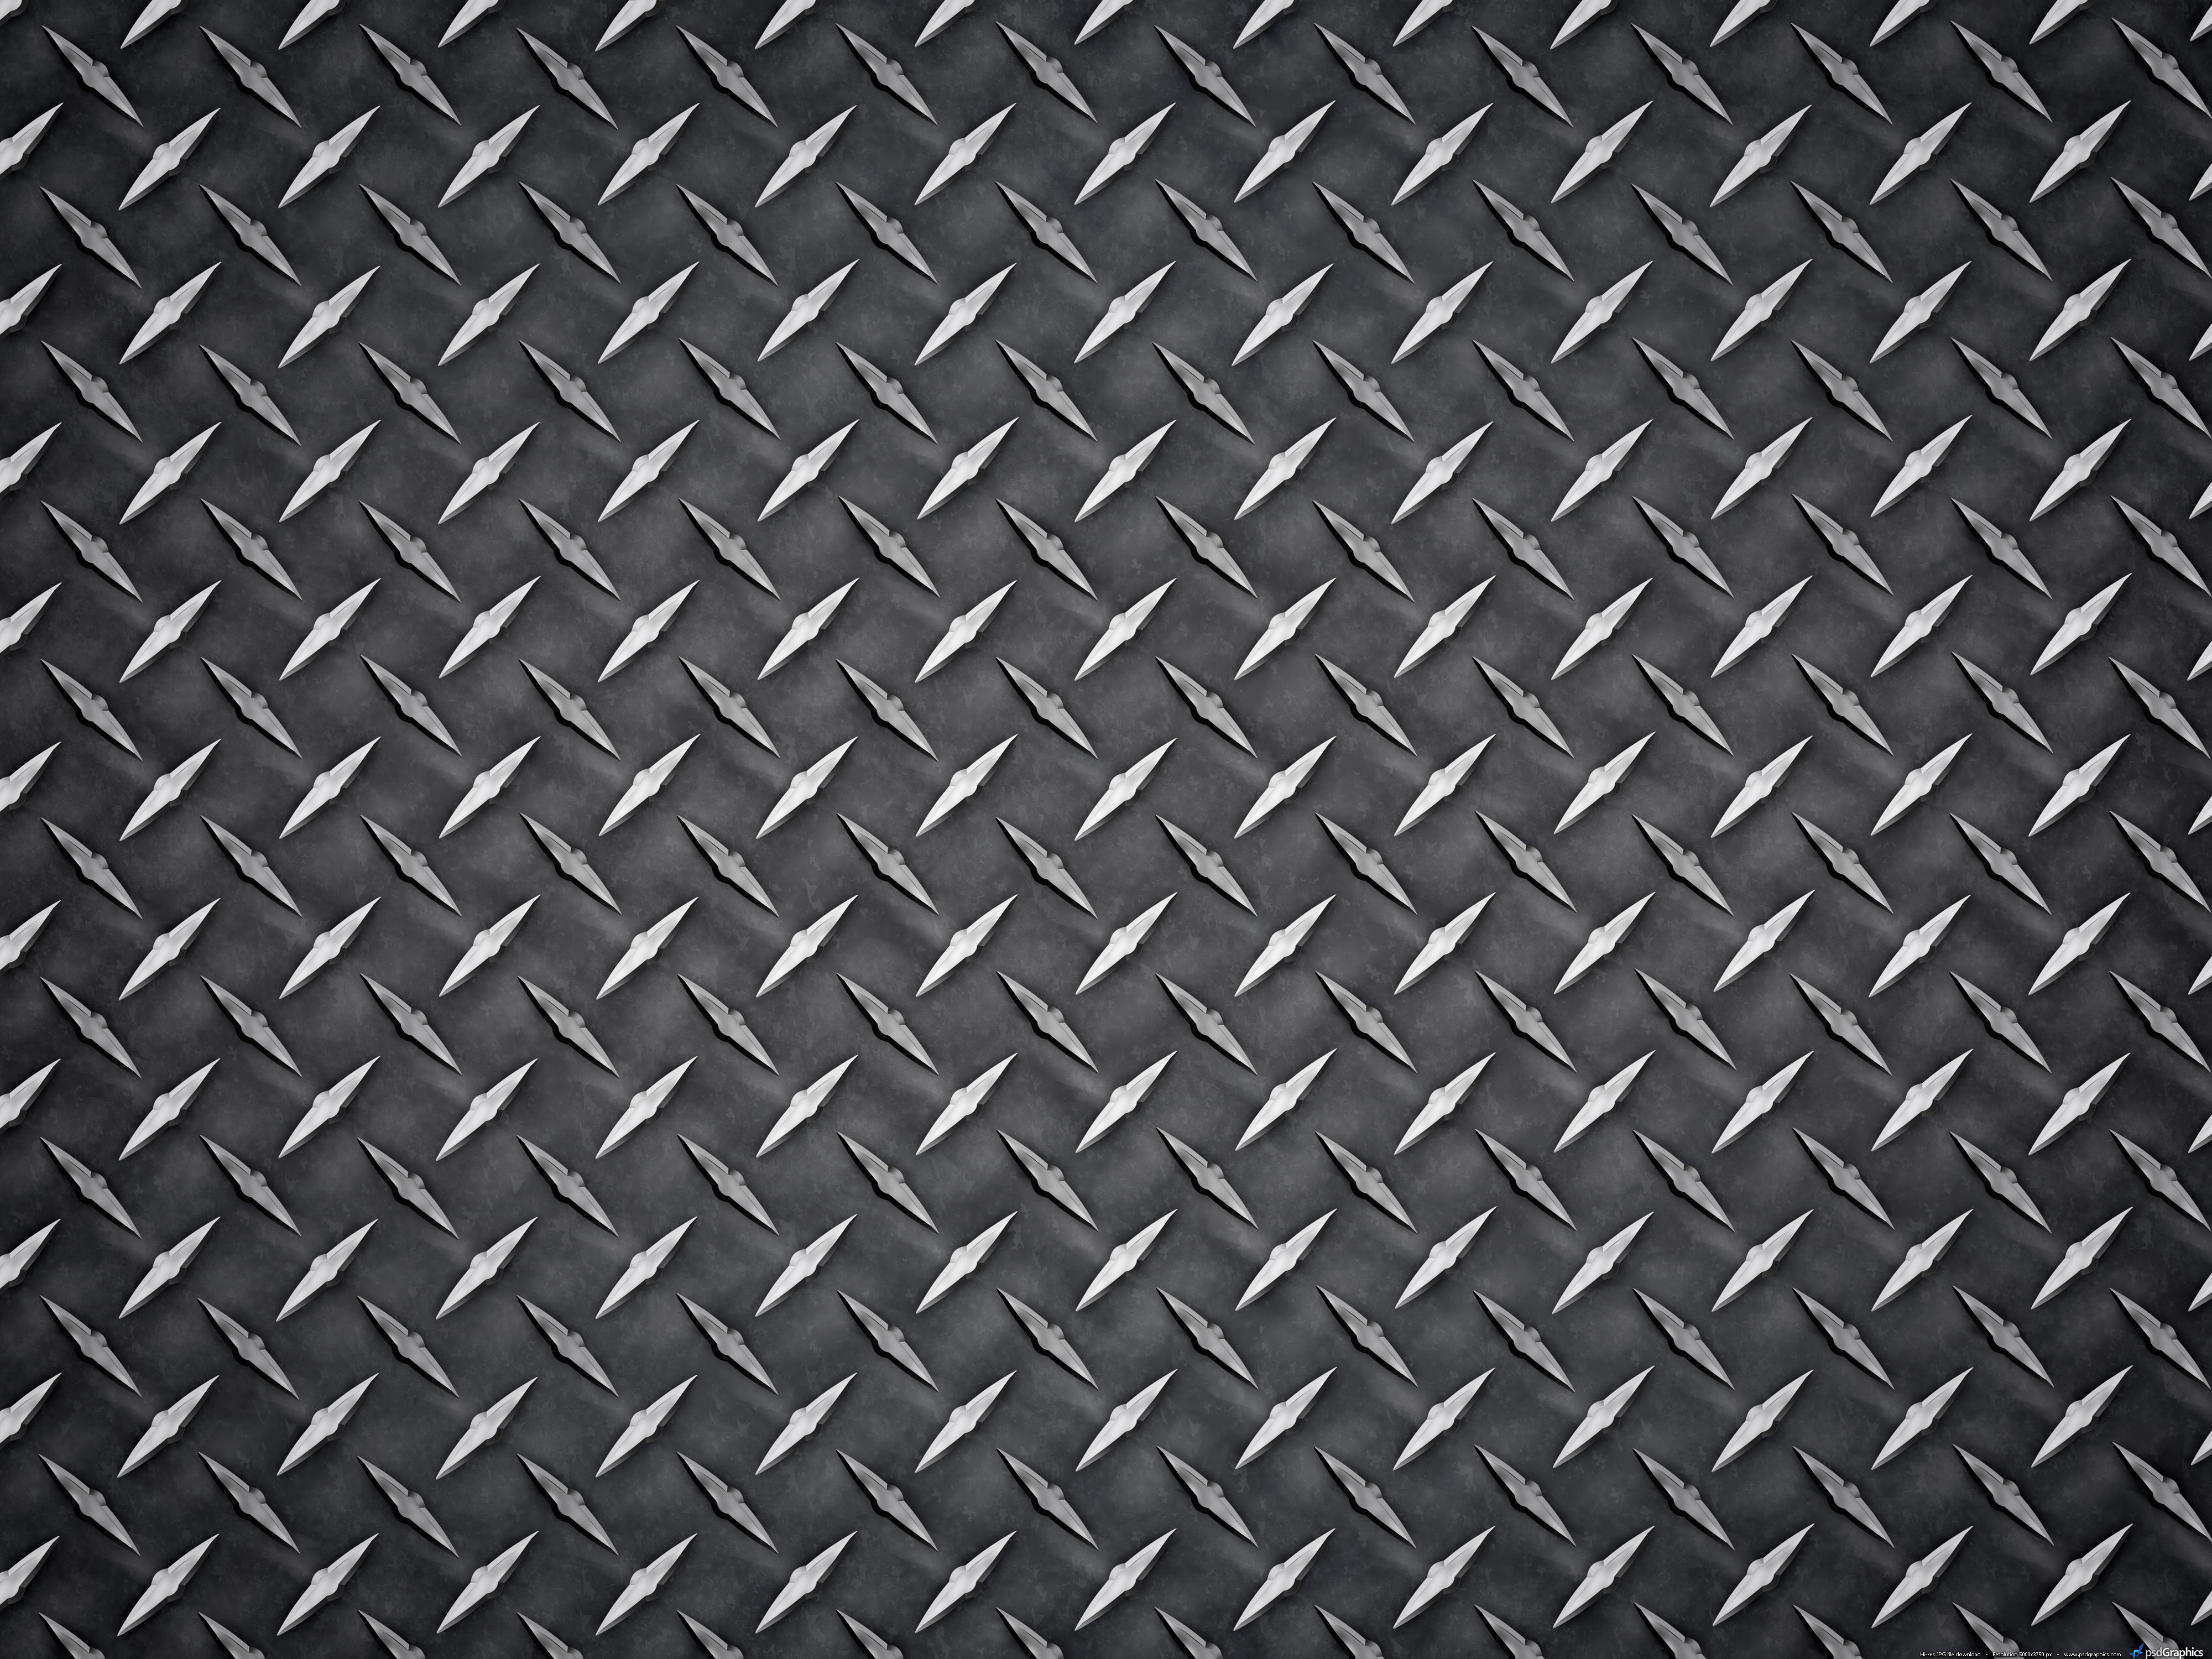 . Hdpng.com Black Diamond Plate.jpg Hdpng.com  - Diamond Plate, Transparent background PNG HD thumbnail